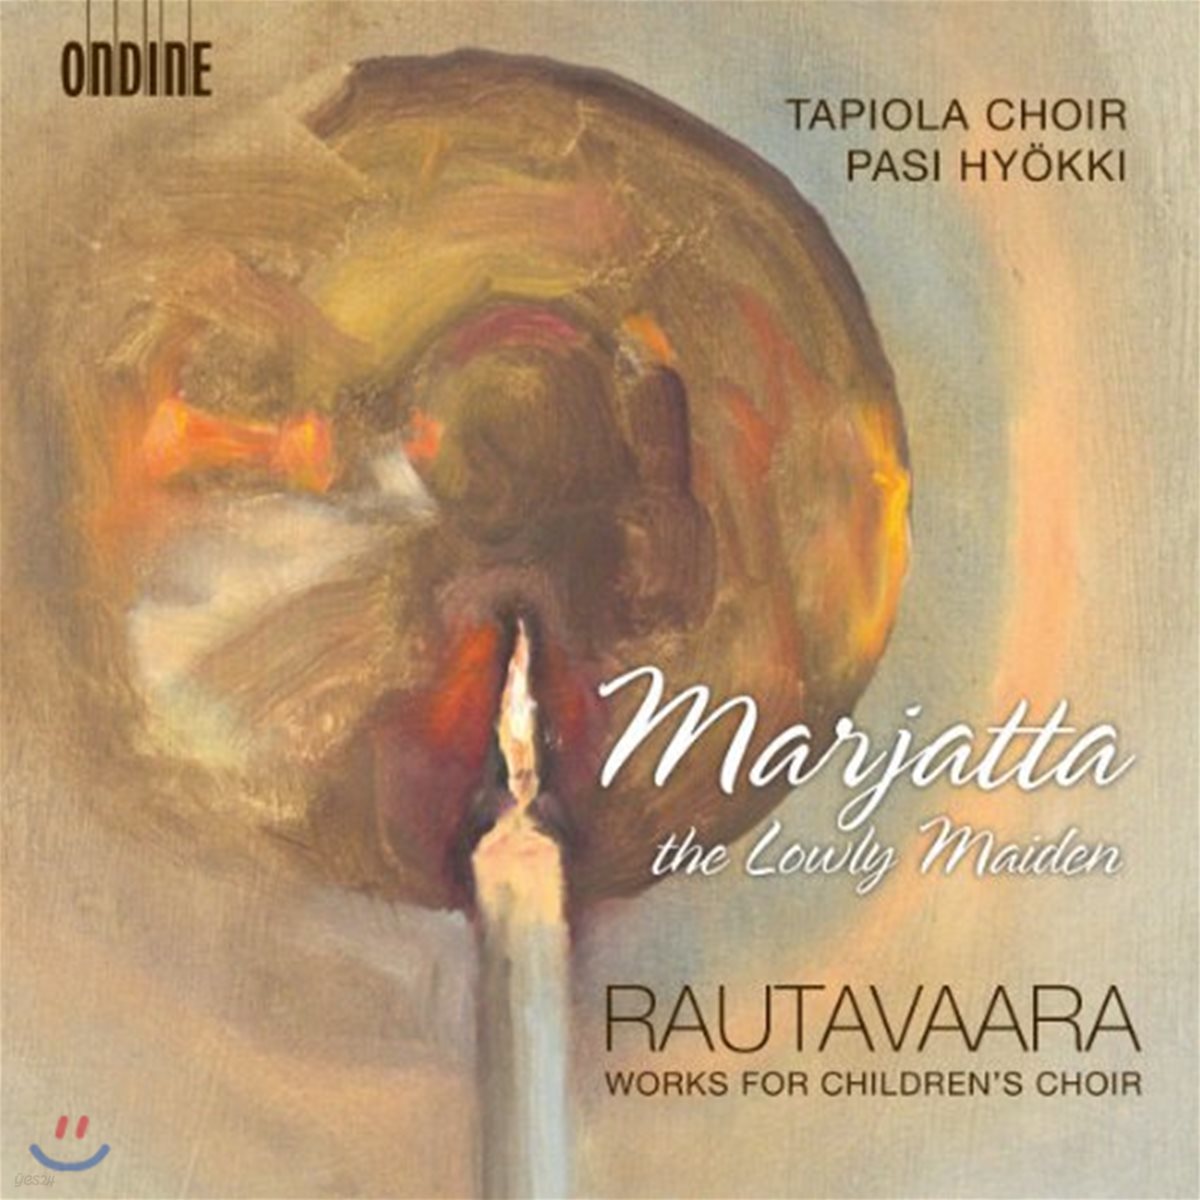 Pasi Hyokki 라우타바라: 어린이 합창단을 위한 작품집 - 파시 히외키 (Rautavaara: Marjatta - Various Works For Childrens Choir)